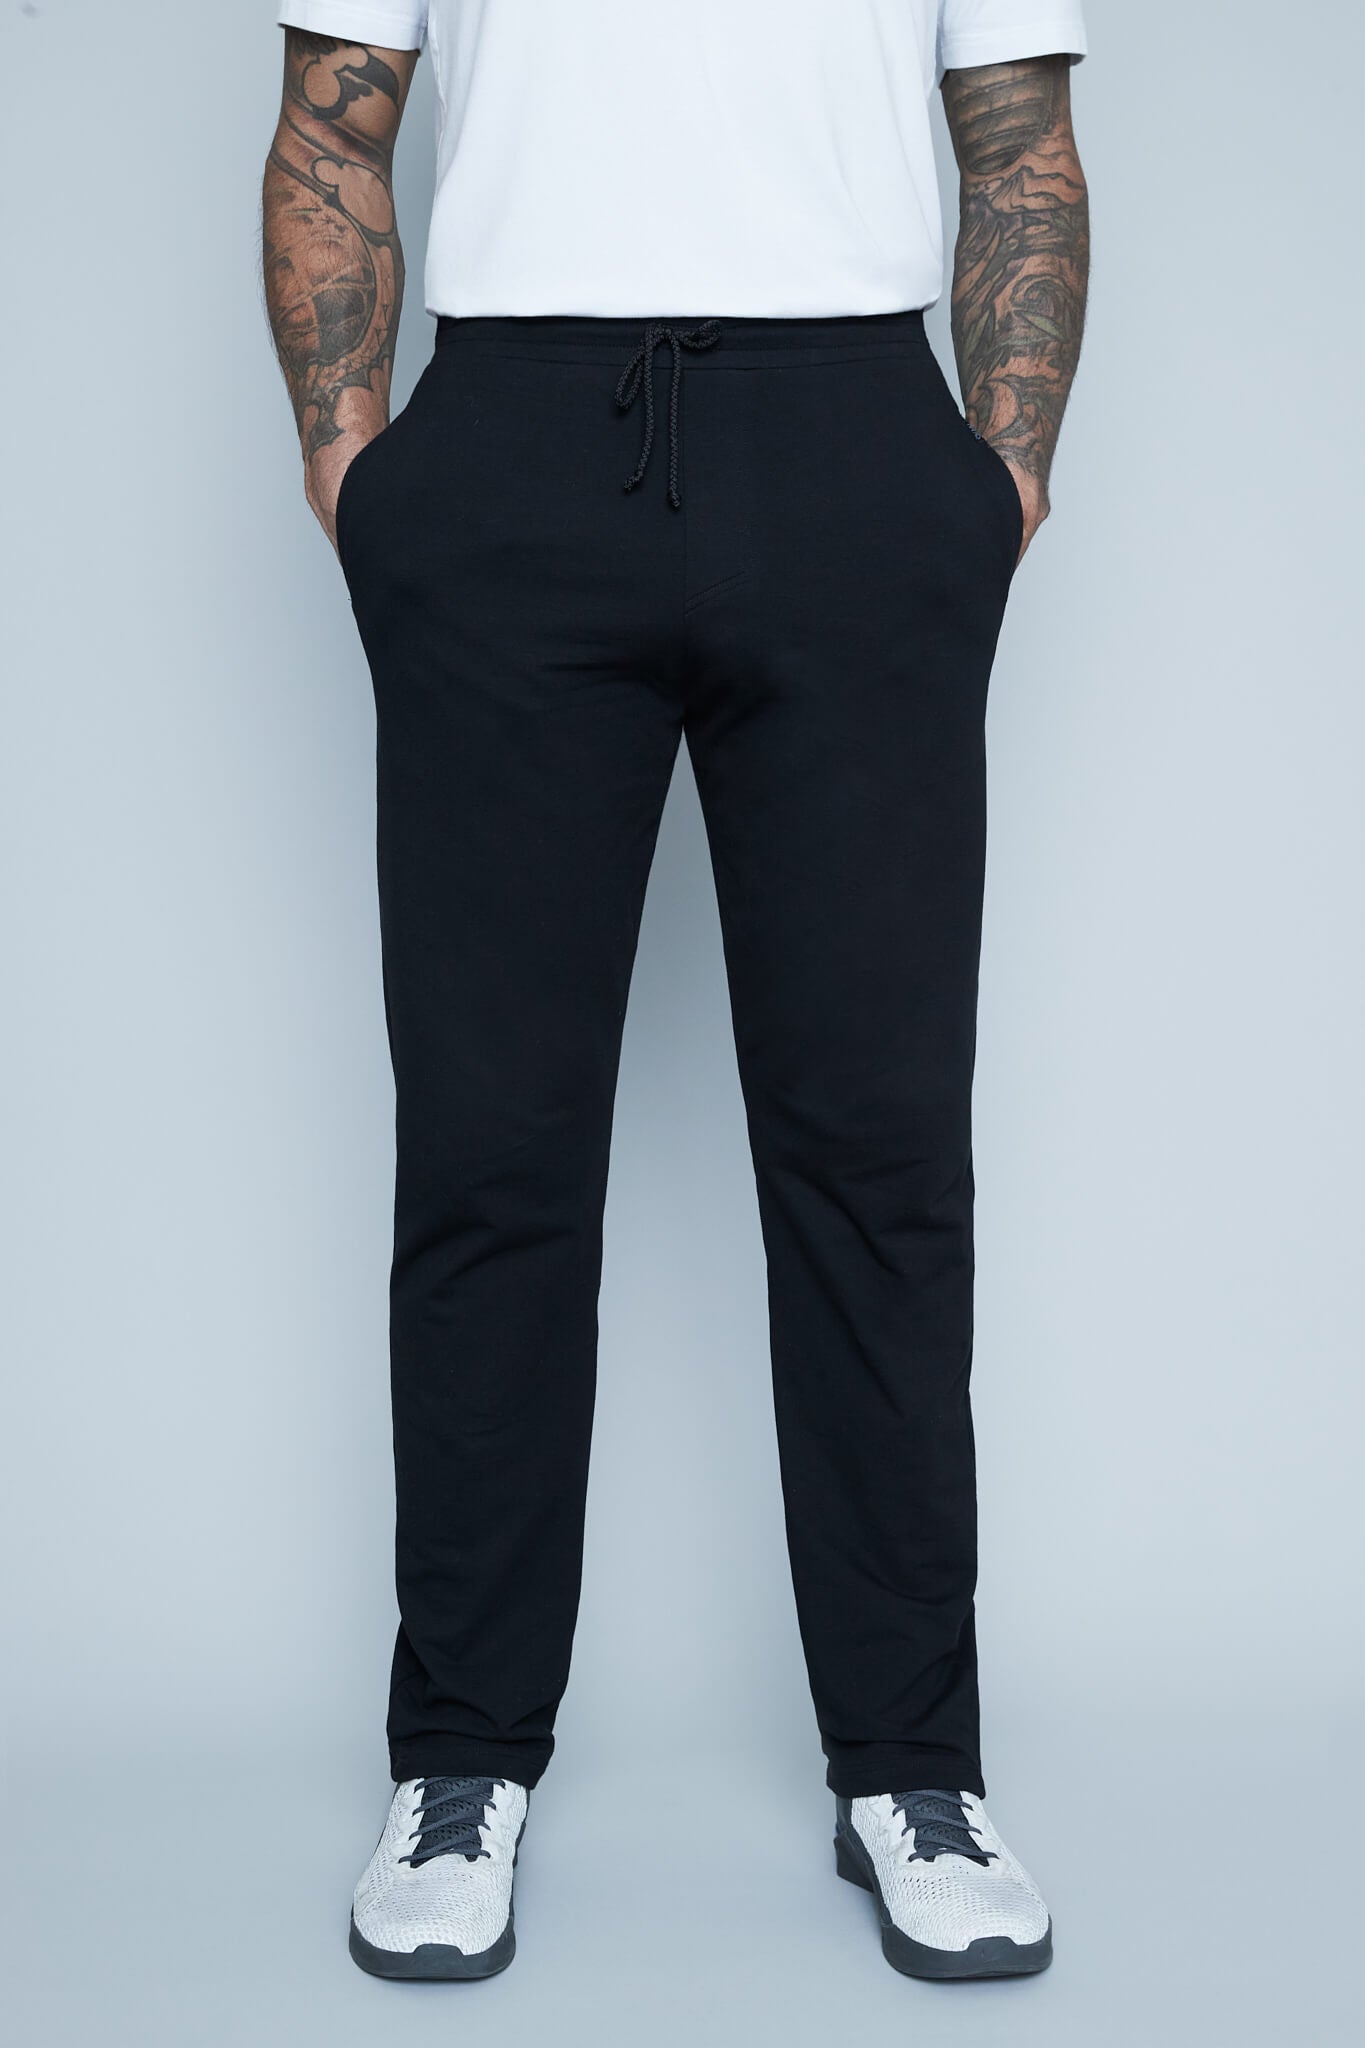 Men Low-rise Sport Sweat Pants Gym Athletic Slim Fit Lounge Trousers Casual  Pant